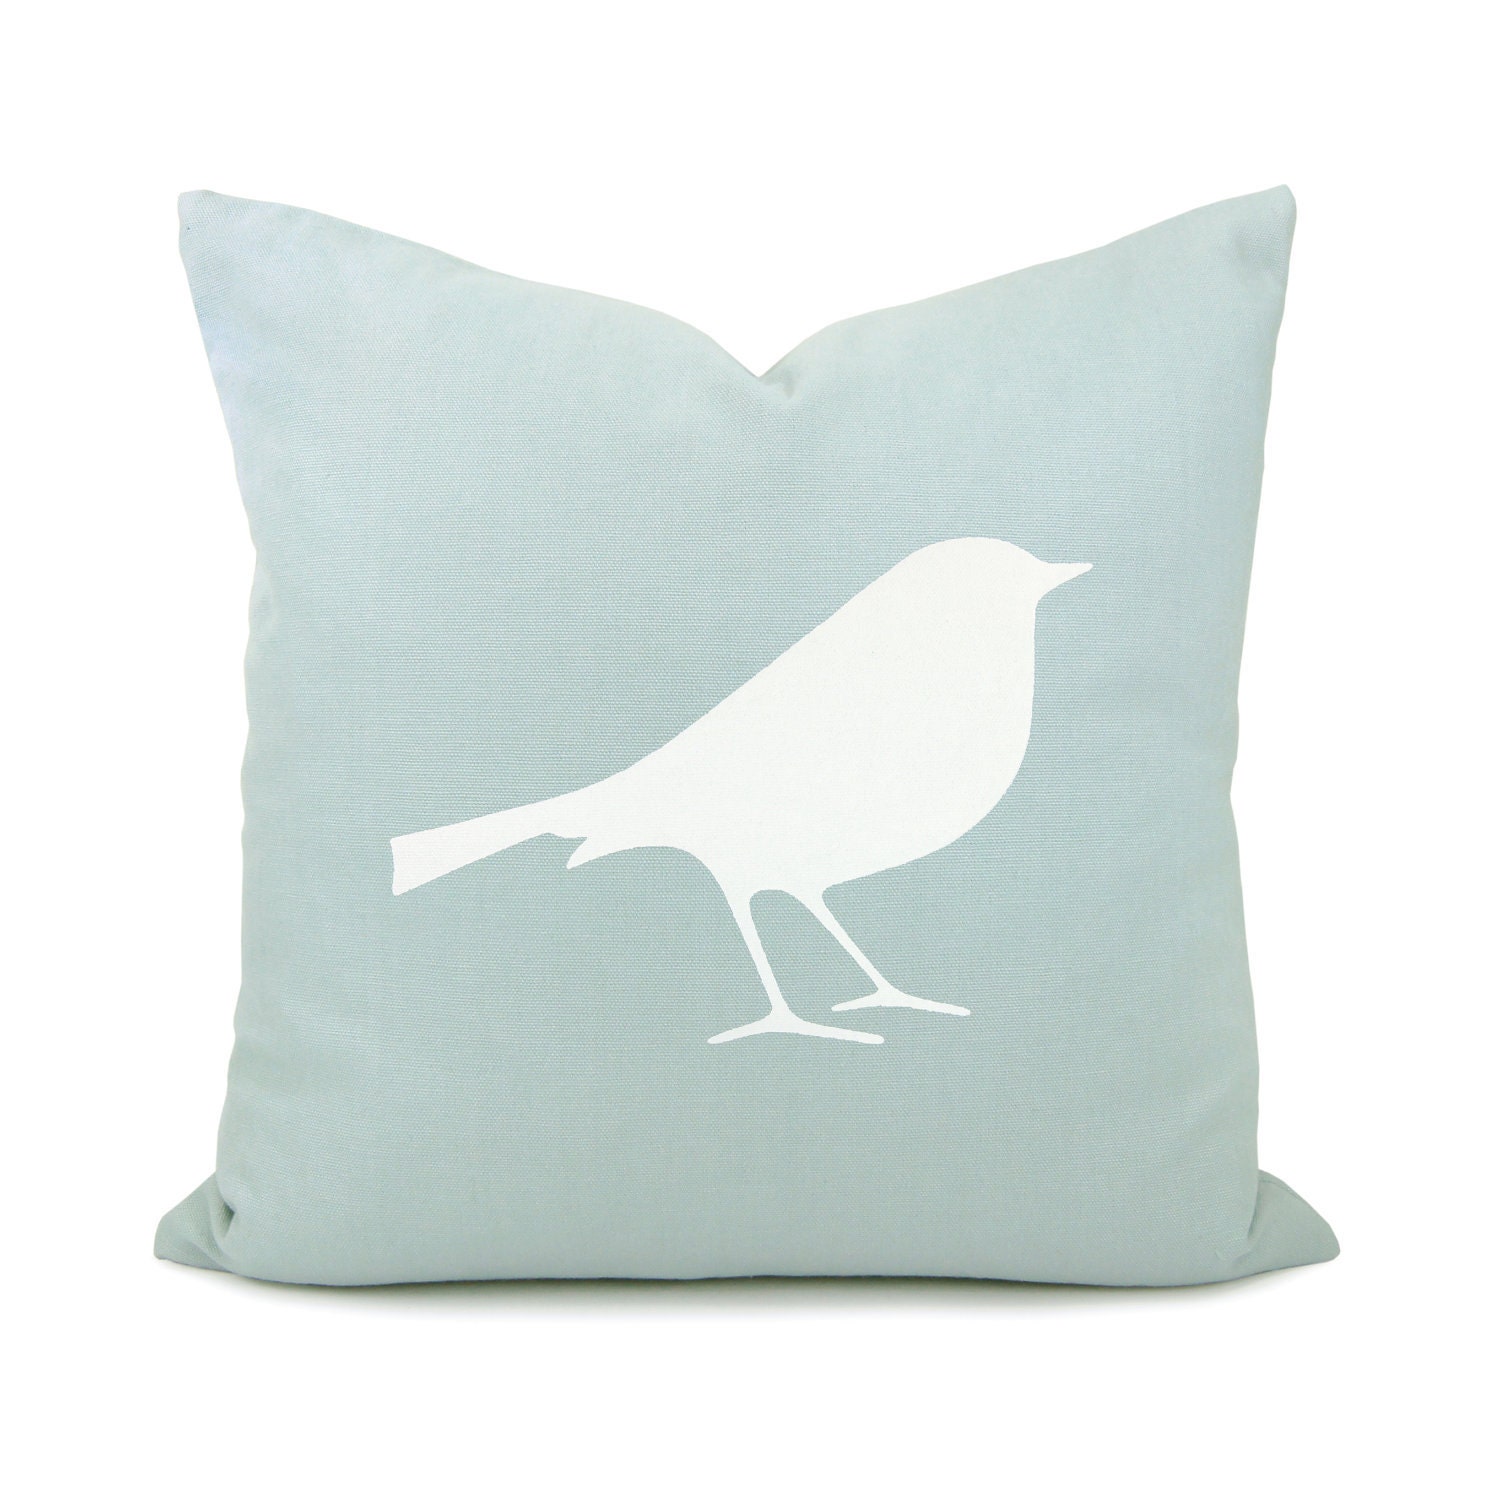 Bird pillow case - White bird print on aquamarine cotton fabric decorative pillow cover - 16x16 throw pillow cover - ClassicByNature